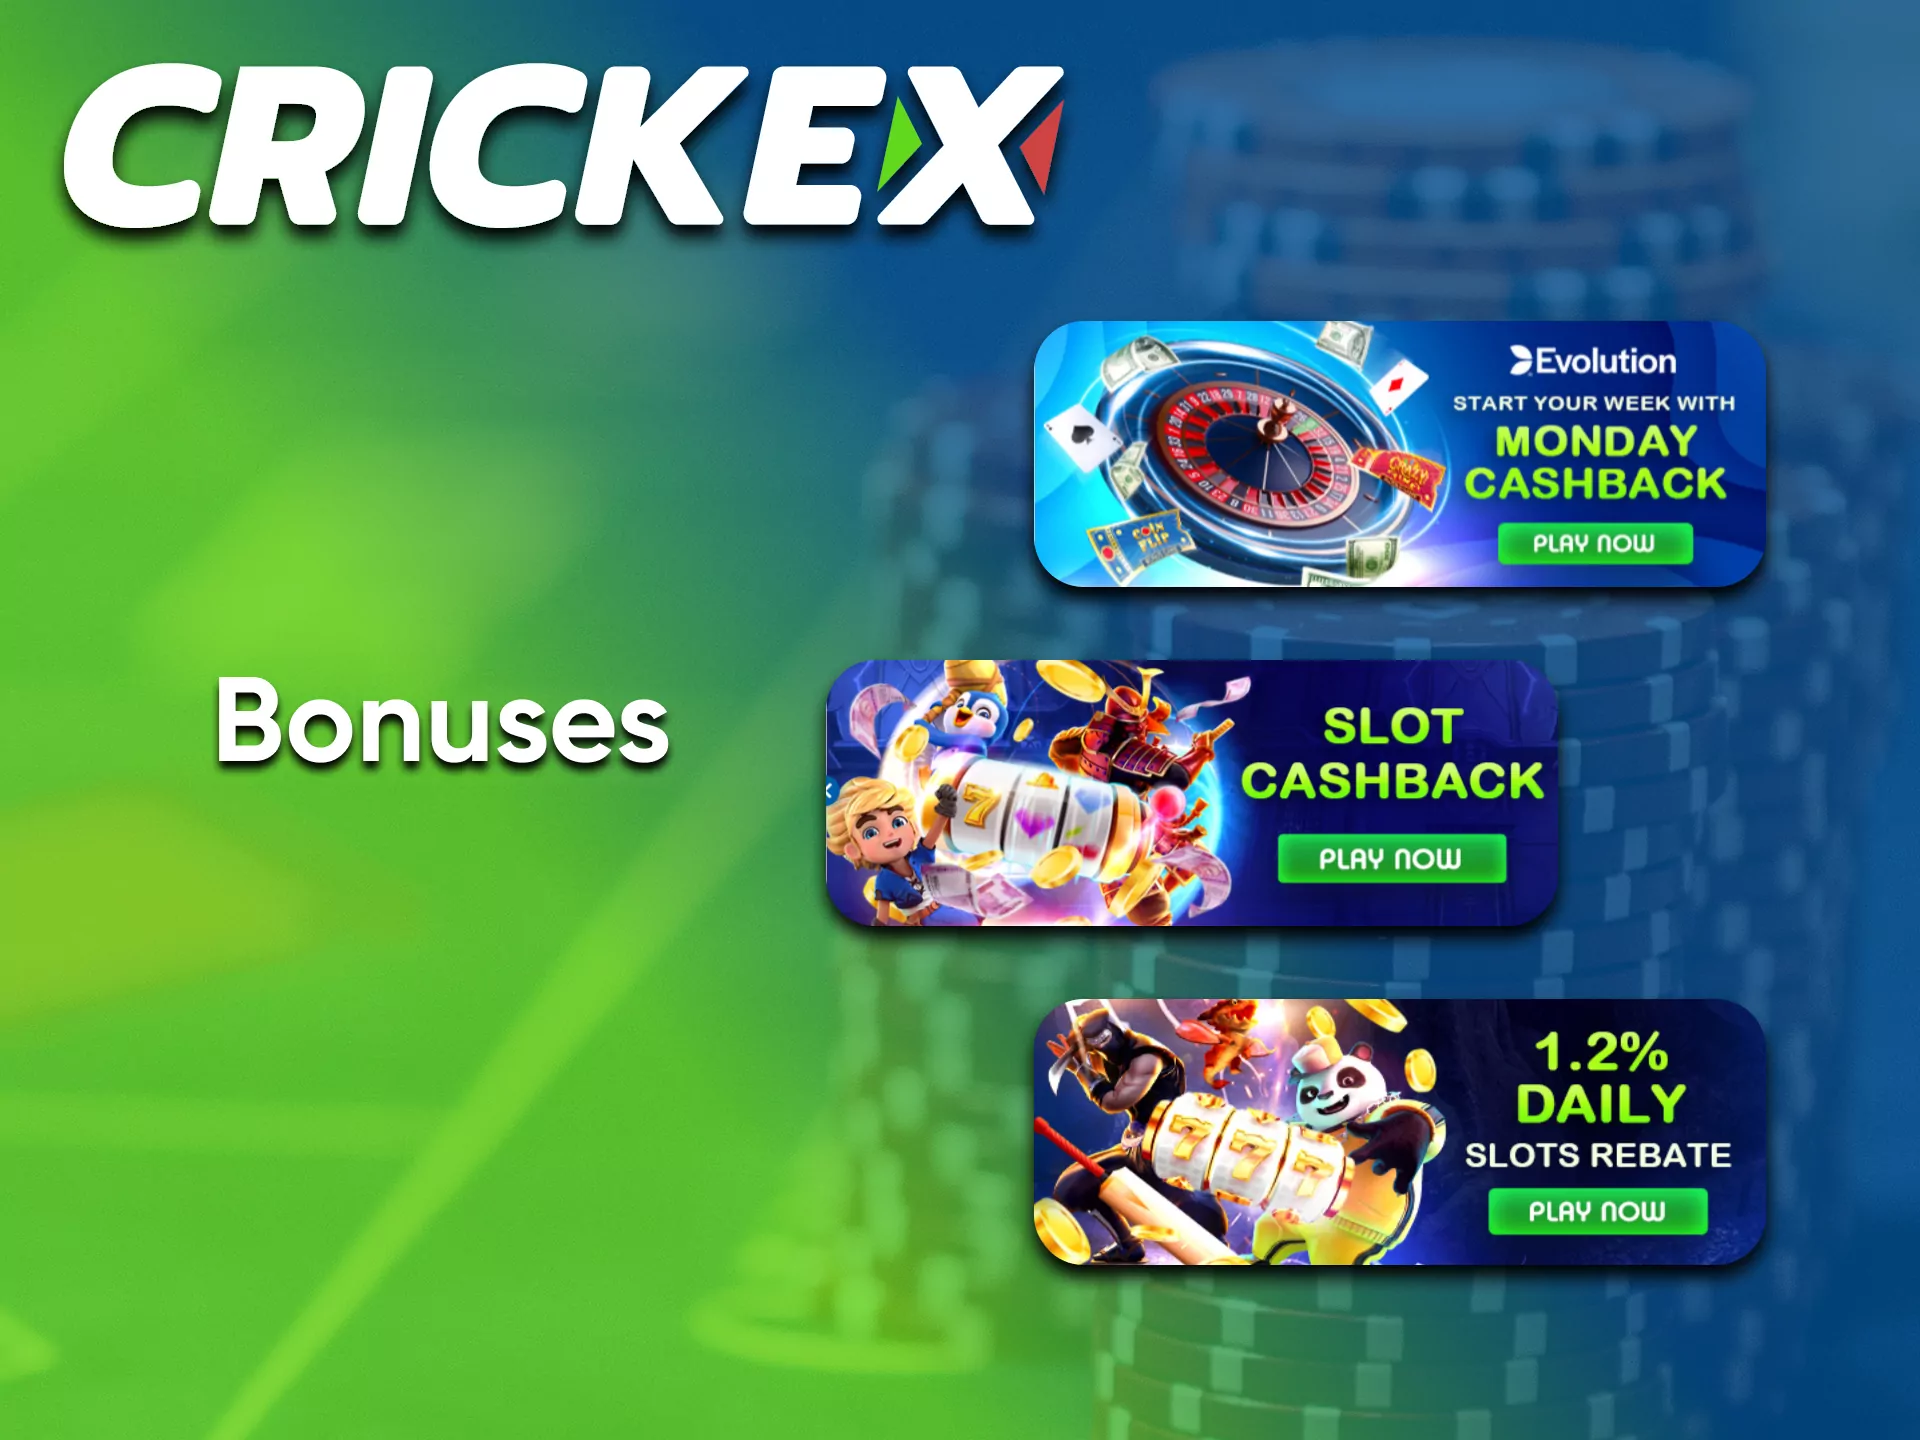 Use the Crickex casino and get bonuses.